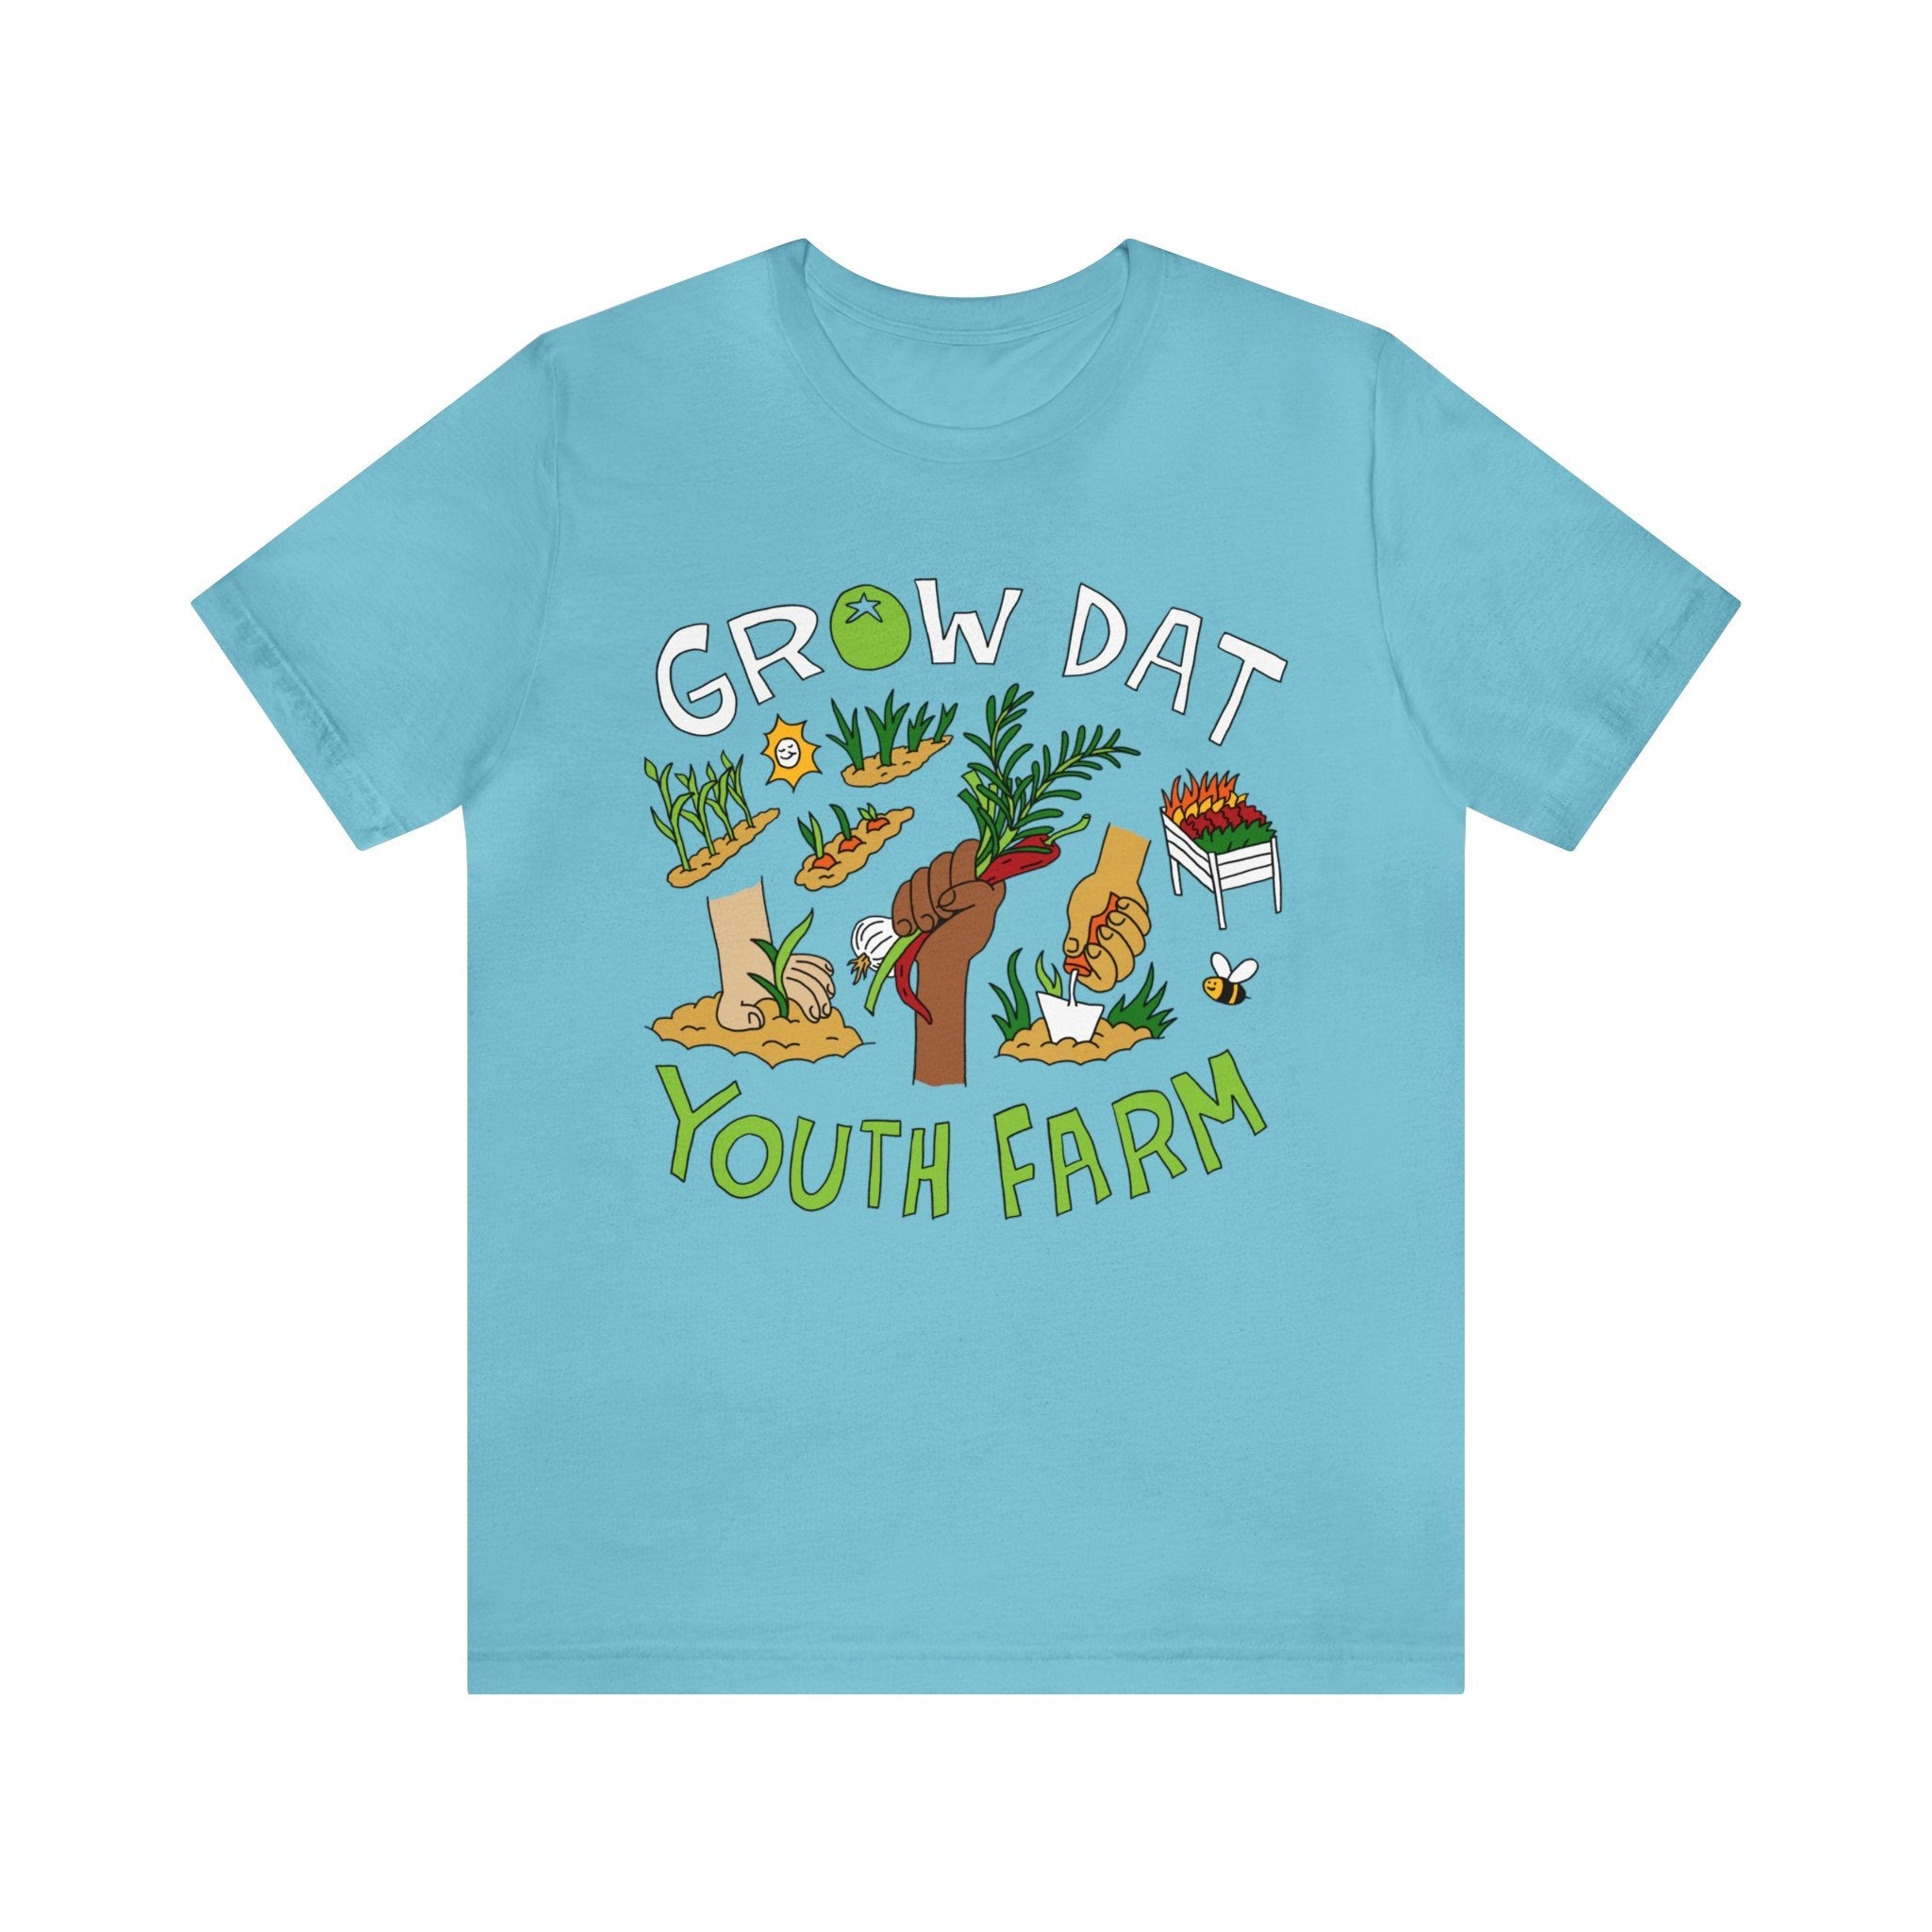 Grow Dat Youth Farm - Dirty Coast Press